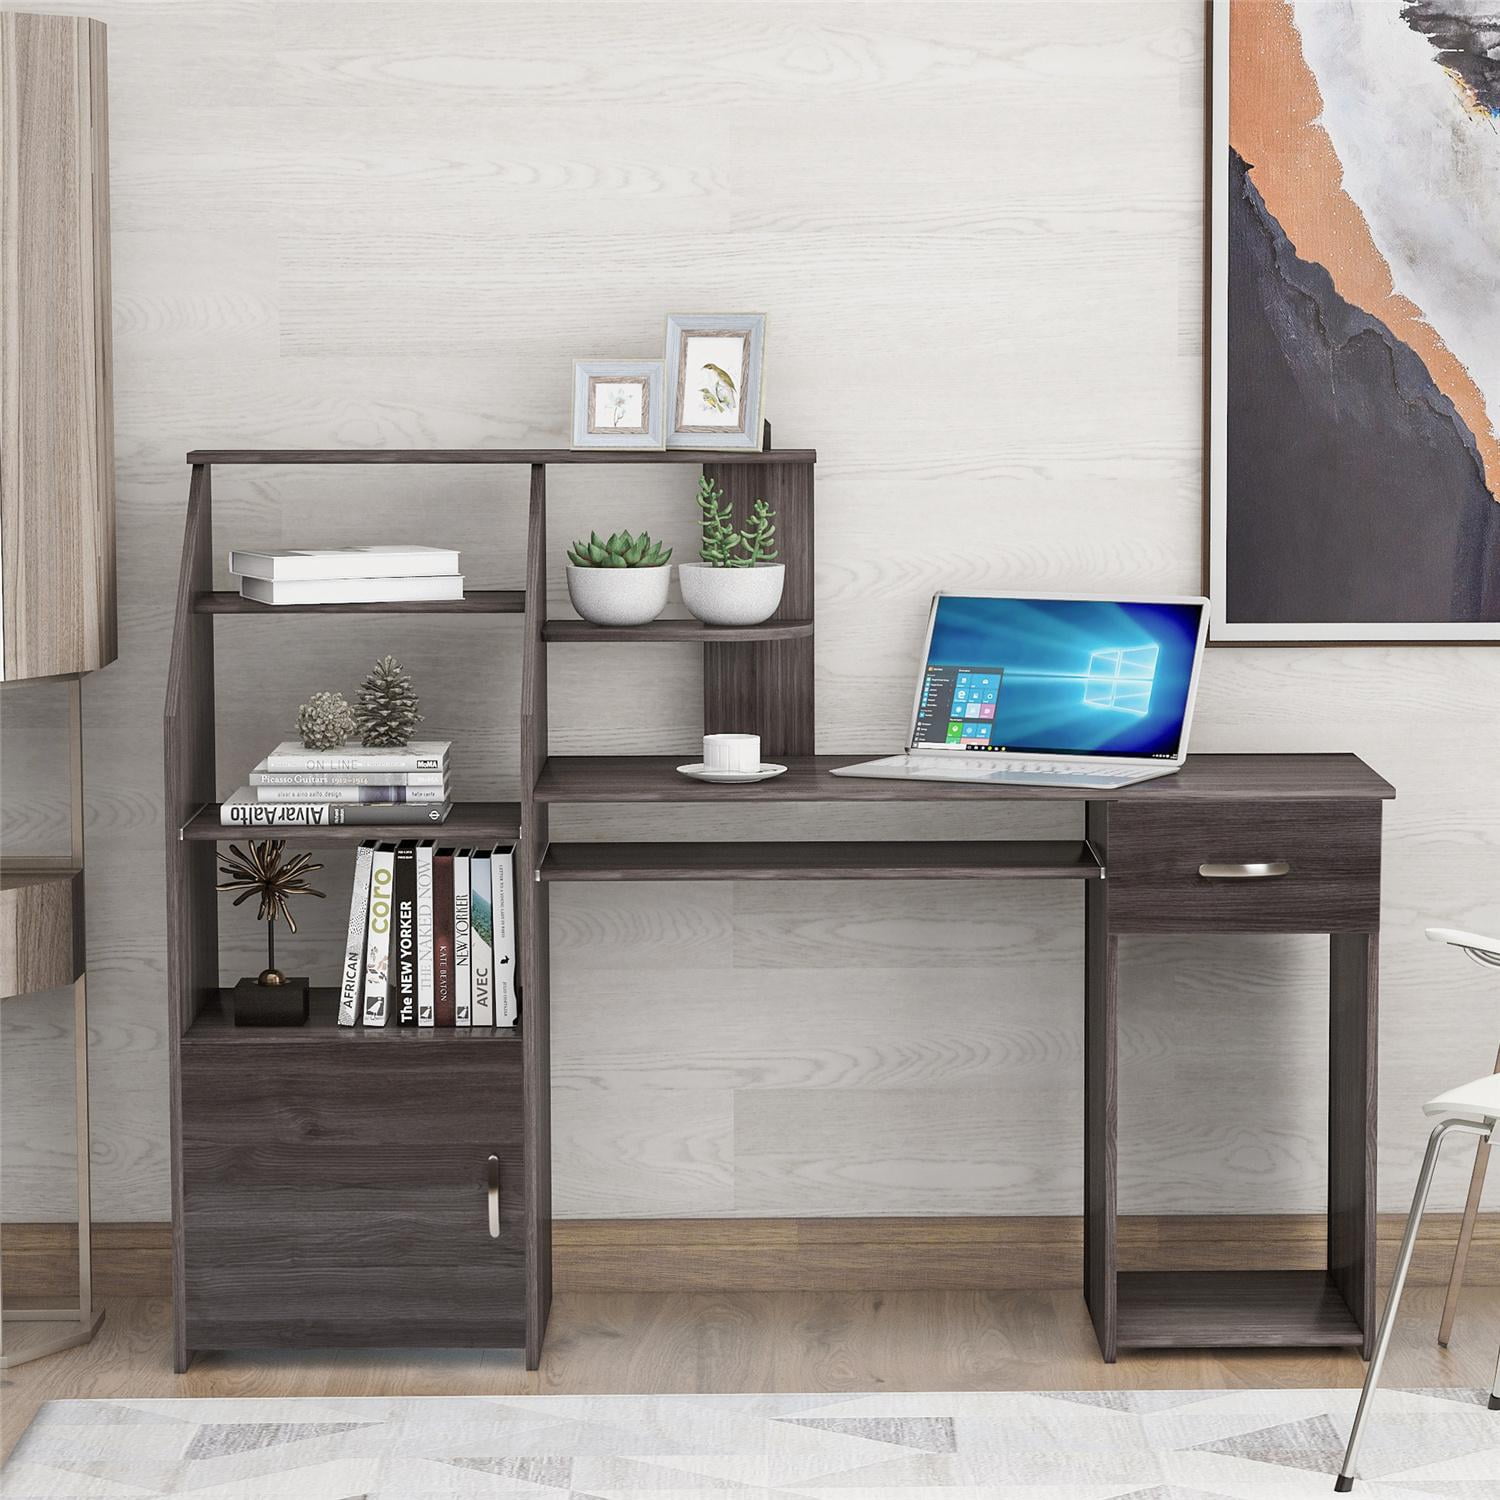 Details about   Computer Desk Home Office Desktop Desk Laptop Study Table Desk W/Drawer Shelf US 